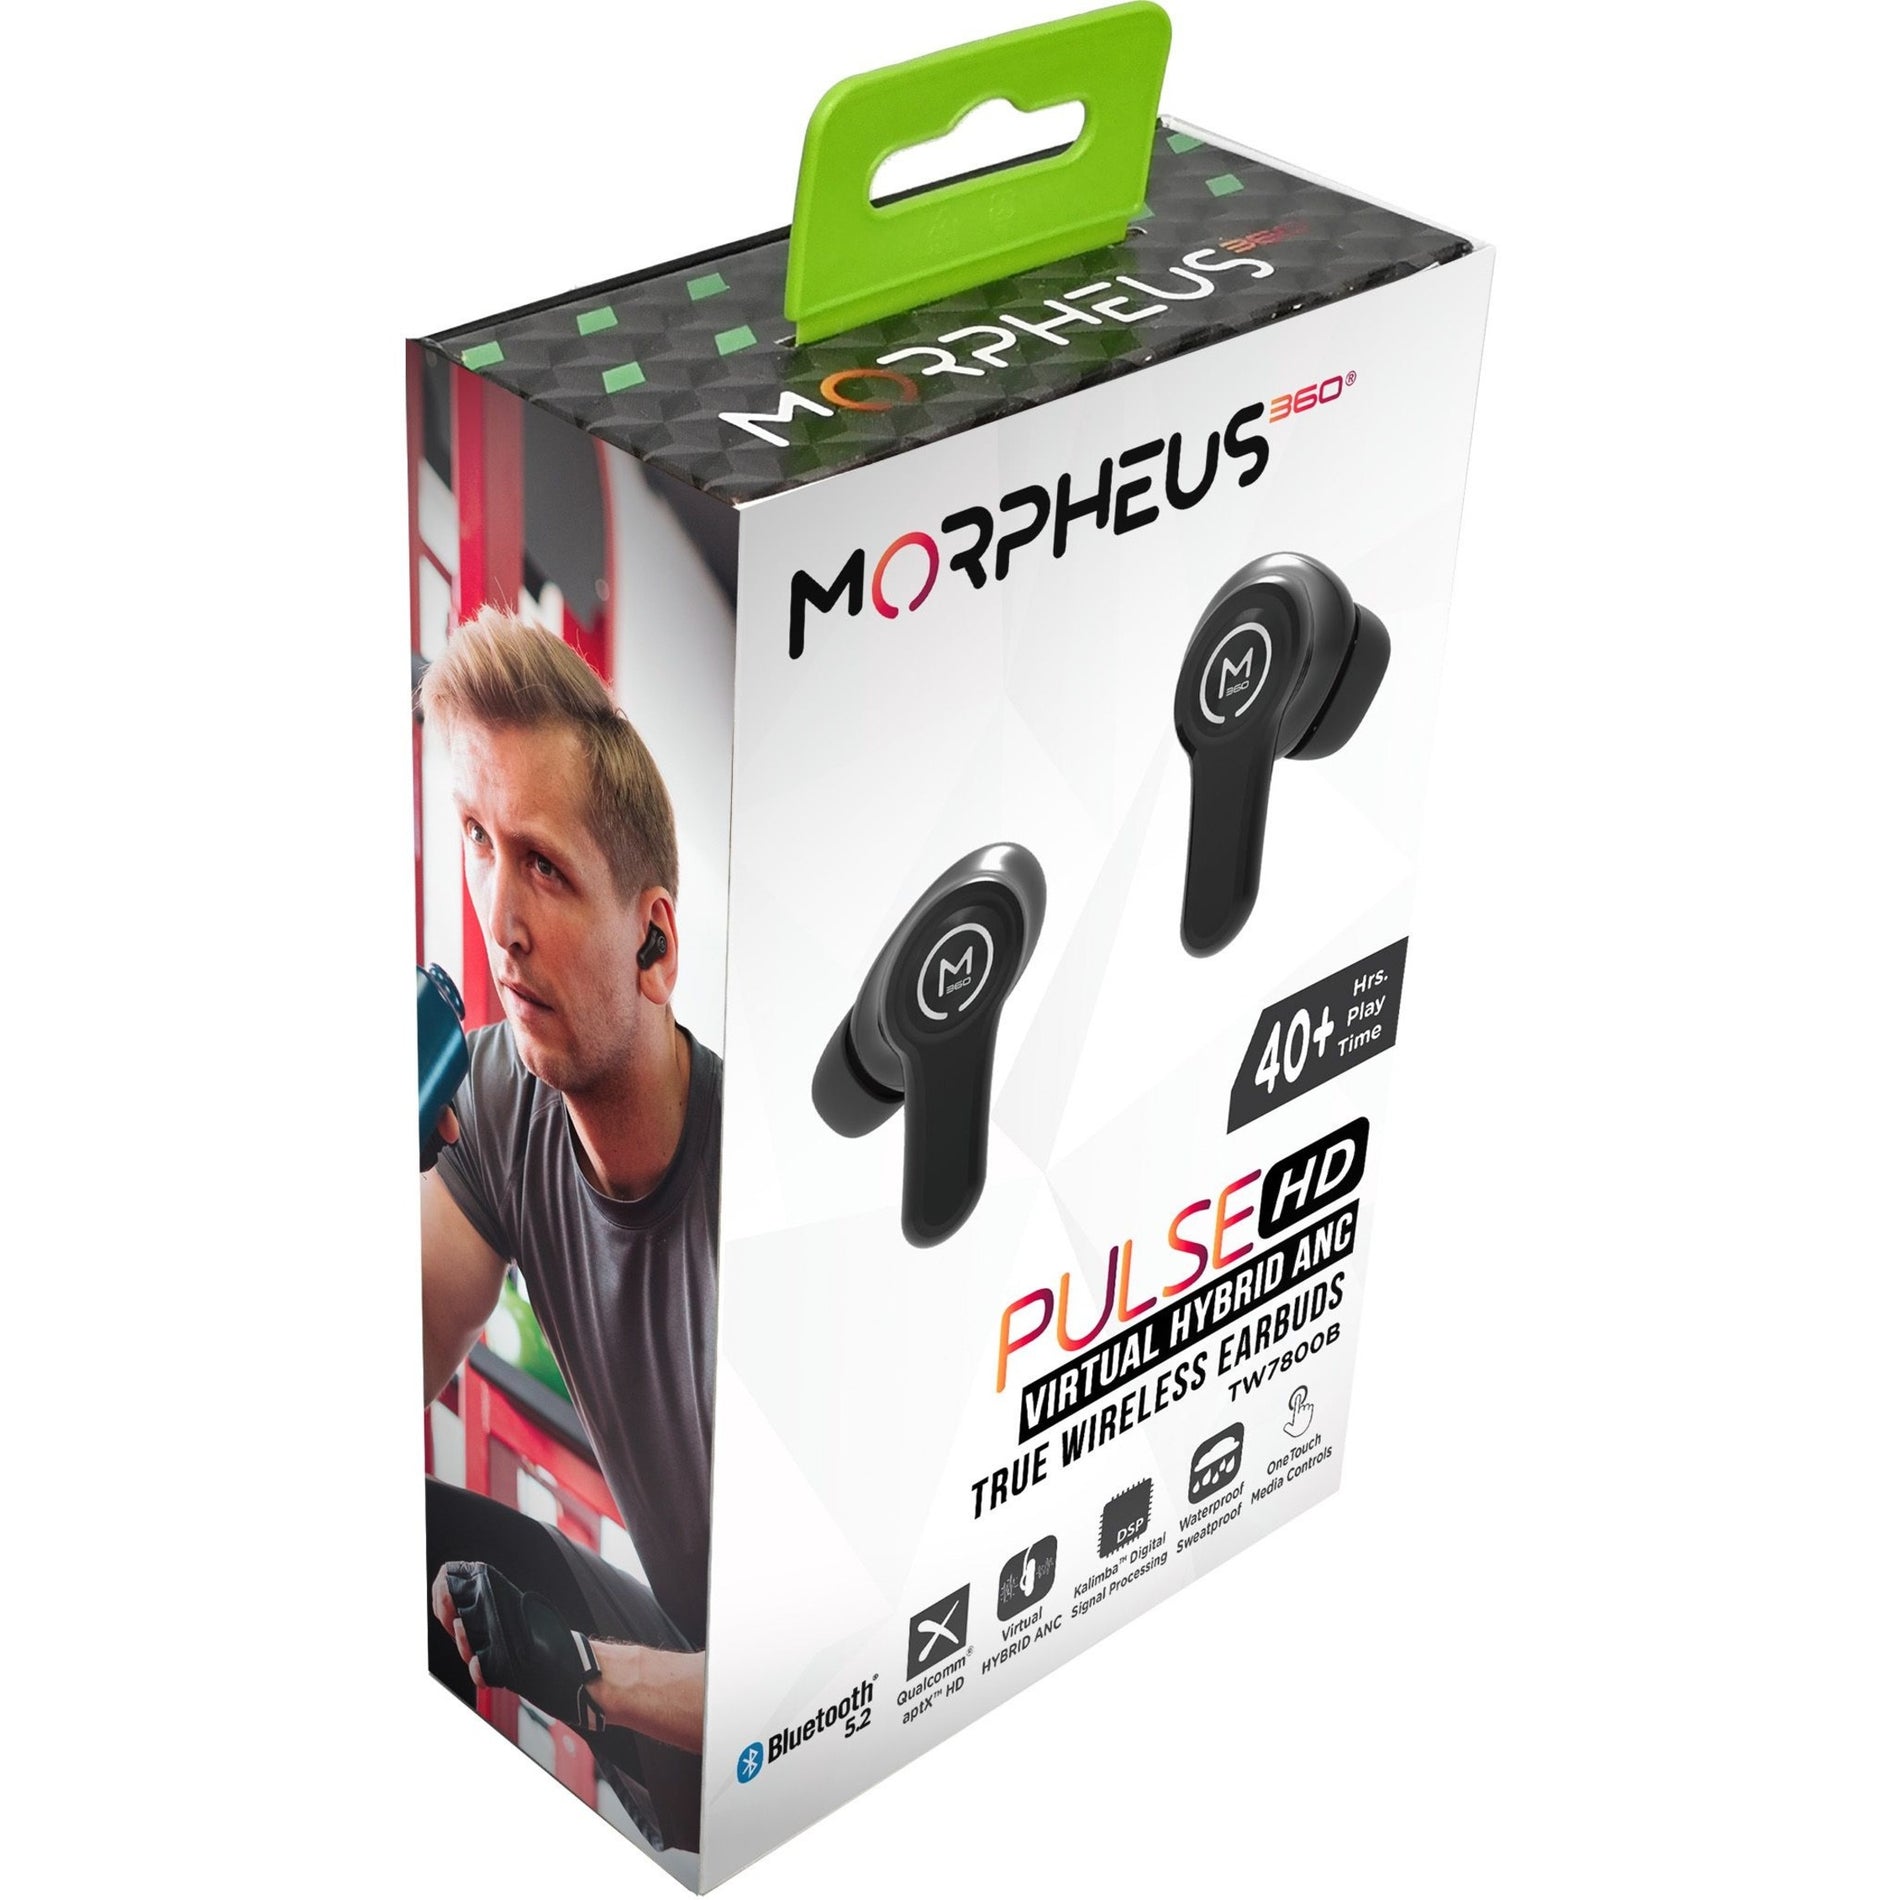 Morpheus 360 TW7800B PUlSE HD True Wireless Earbuds, Virtual Hybrid ANC, Bluetooth 5.2, Black [Discontinued]